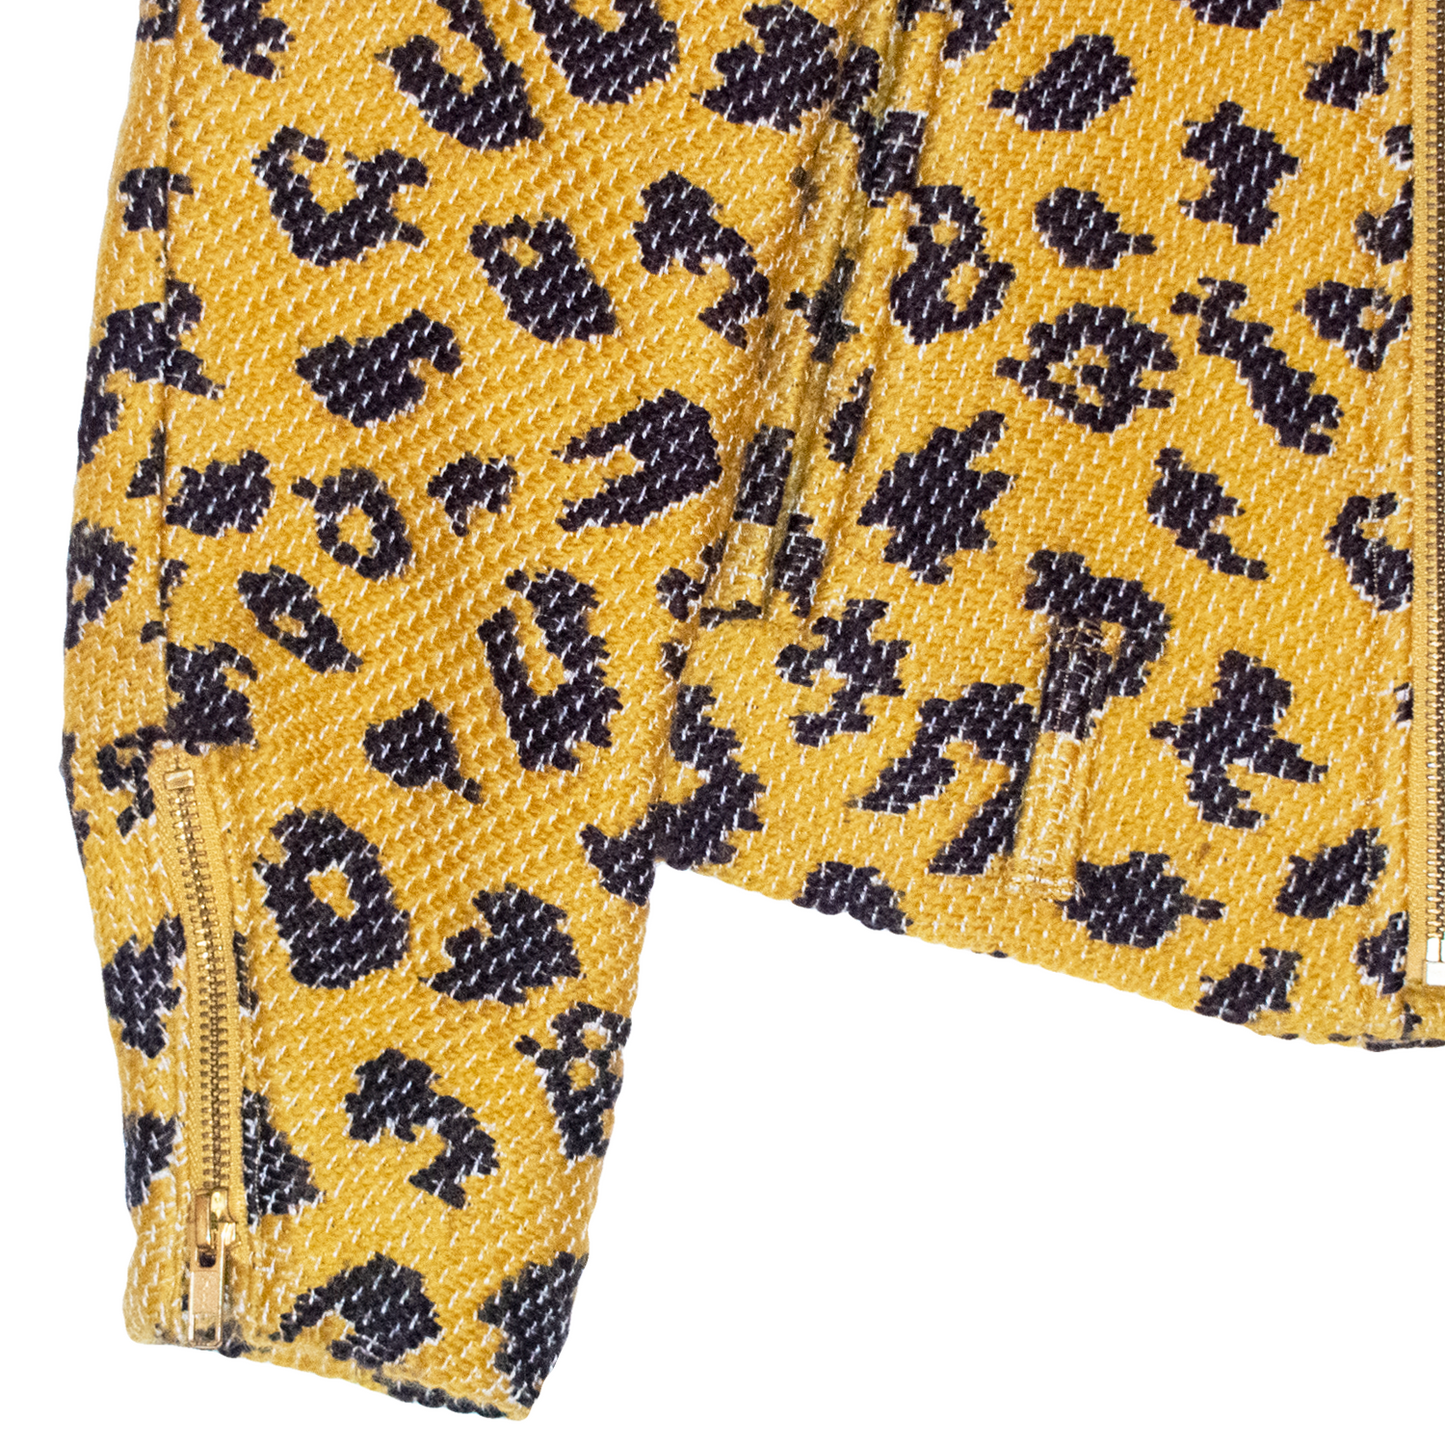 Né-Net Leopard Print Wool Riders Jacket